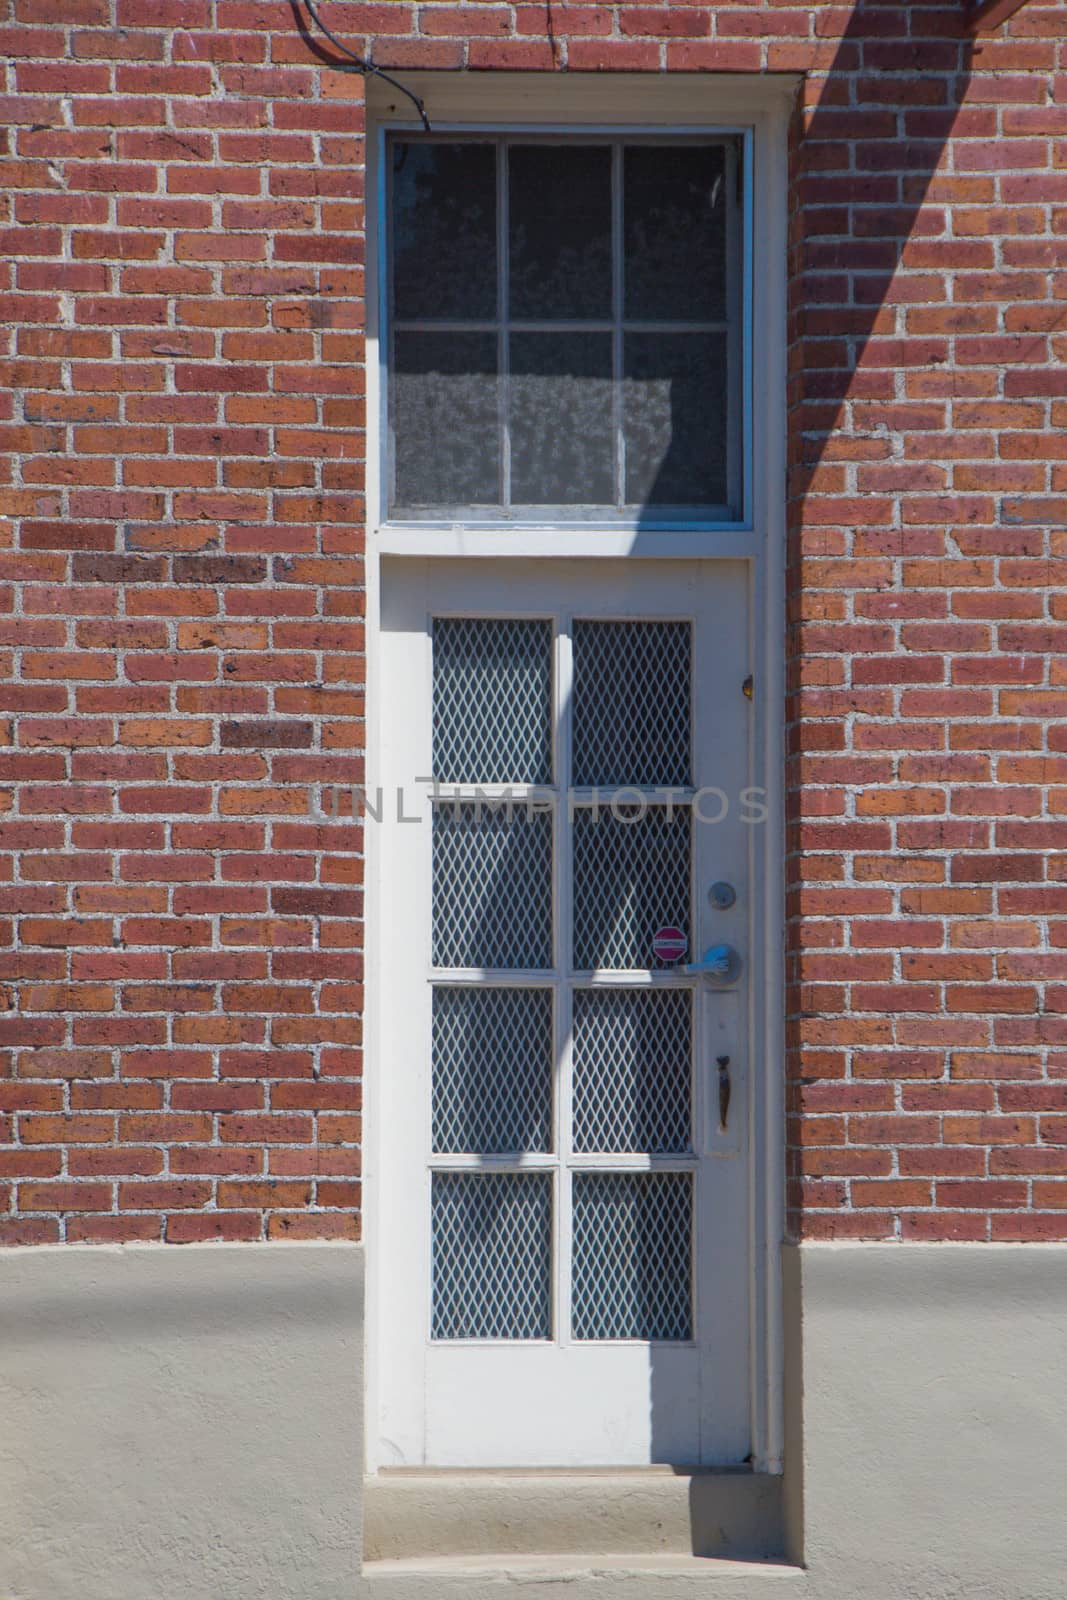 Windows on Brick Building by cestes001